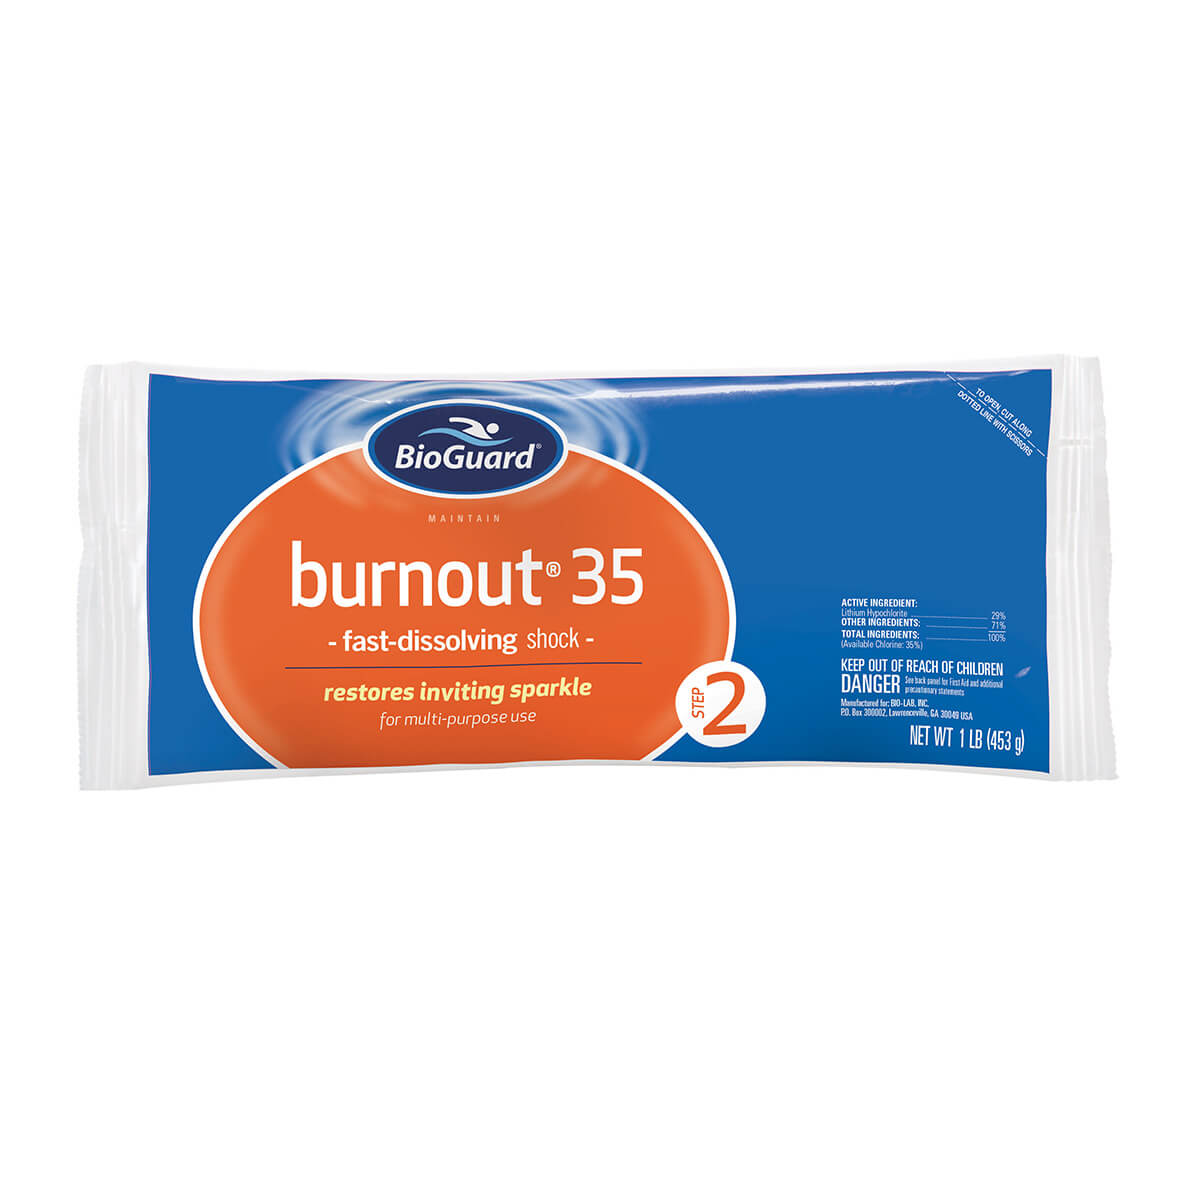 BioGuard Burnout 35